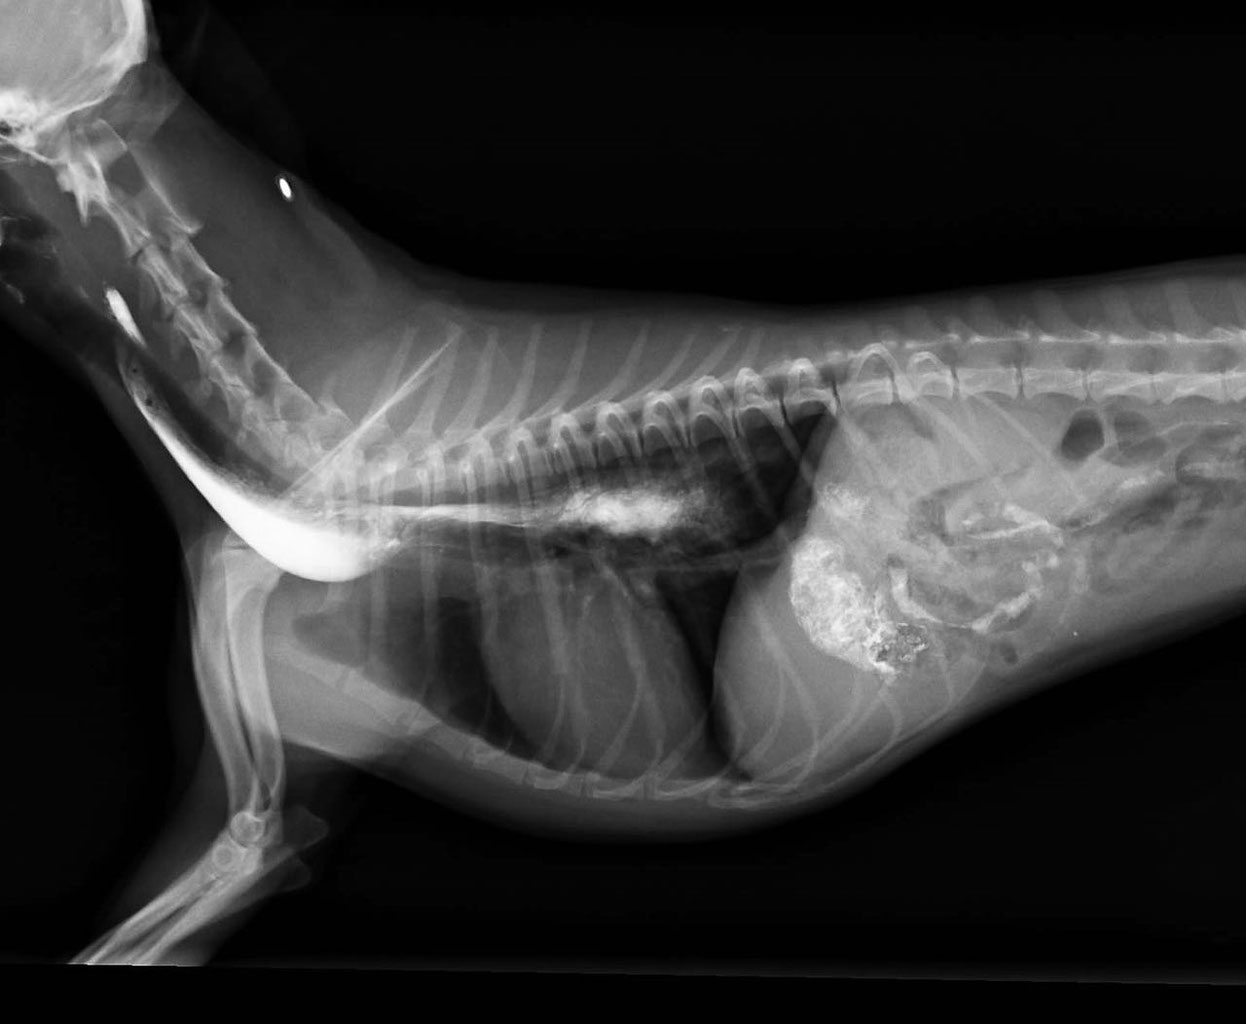 röntgenbildzeigtmithilfedekontrastmittelsdenmegaösophagus